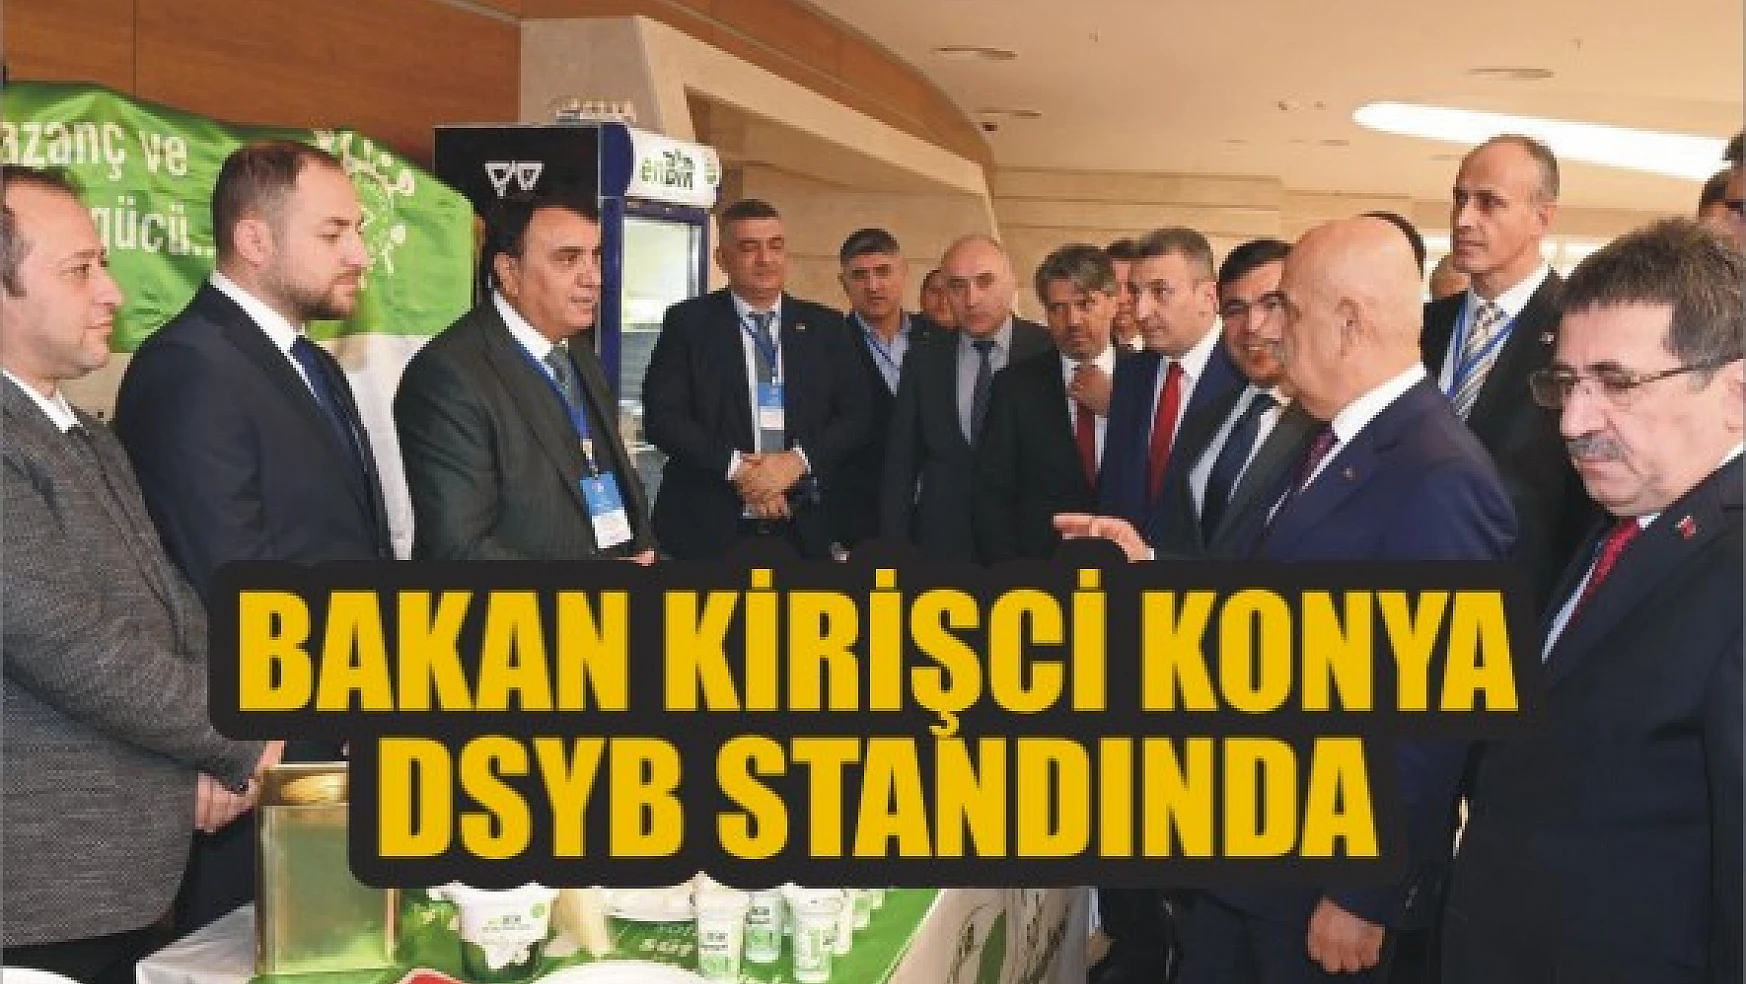 Bakan Kirişci Konya DSYB standında